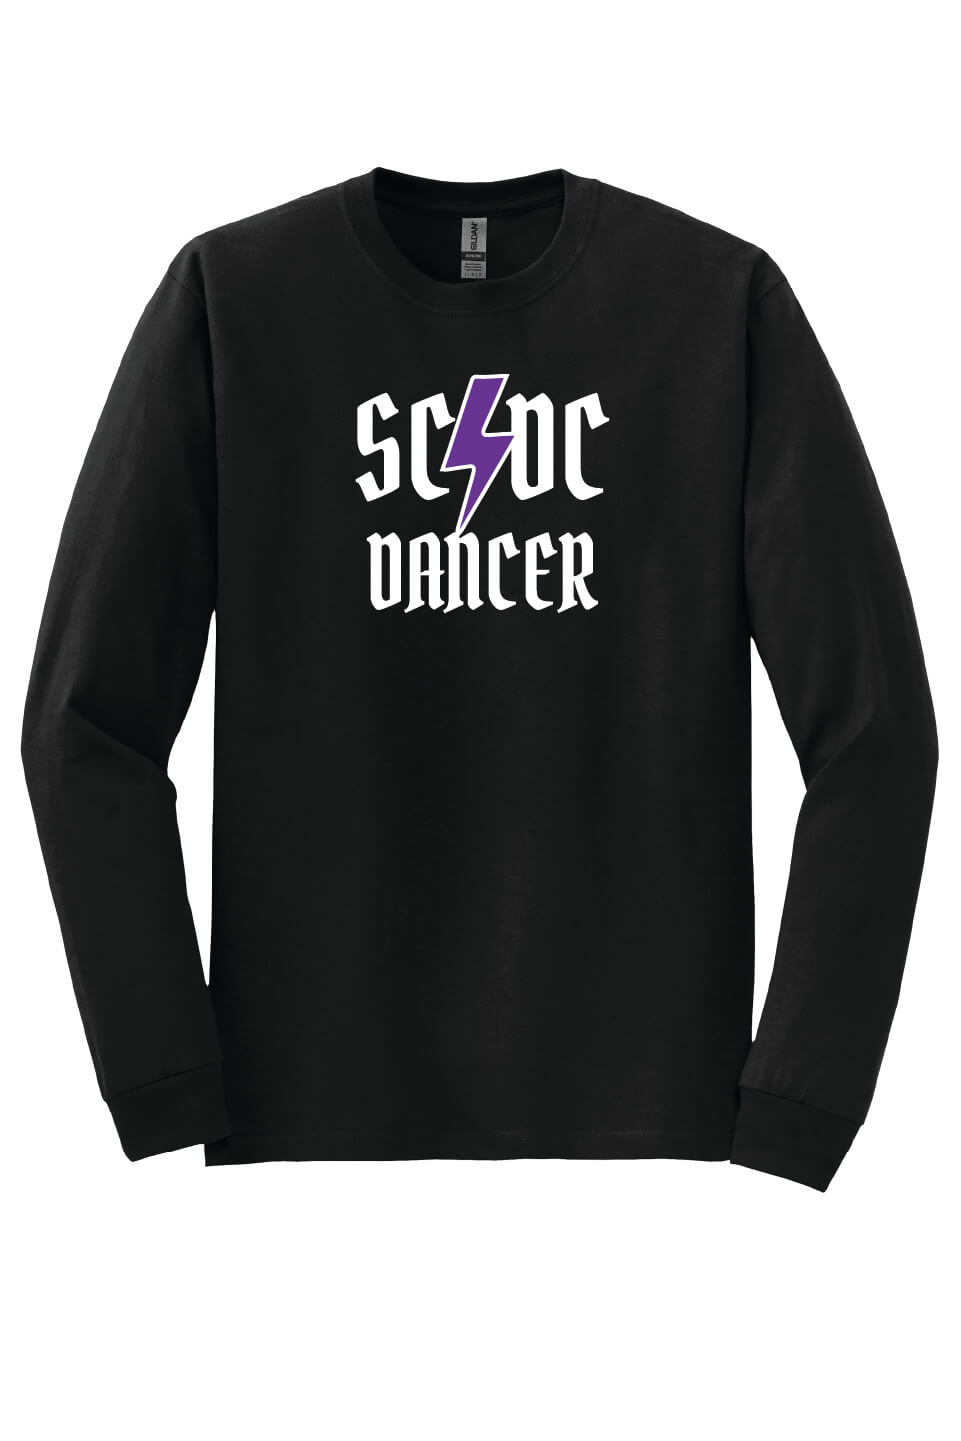 SCDC Dancer Long Sleeve T-Shirt black